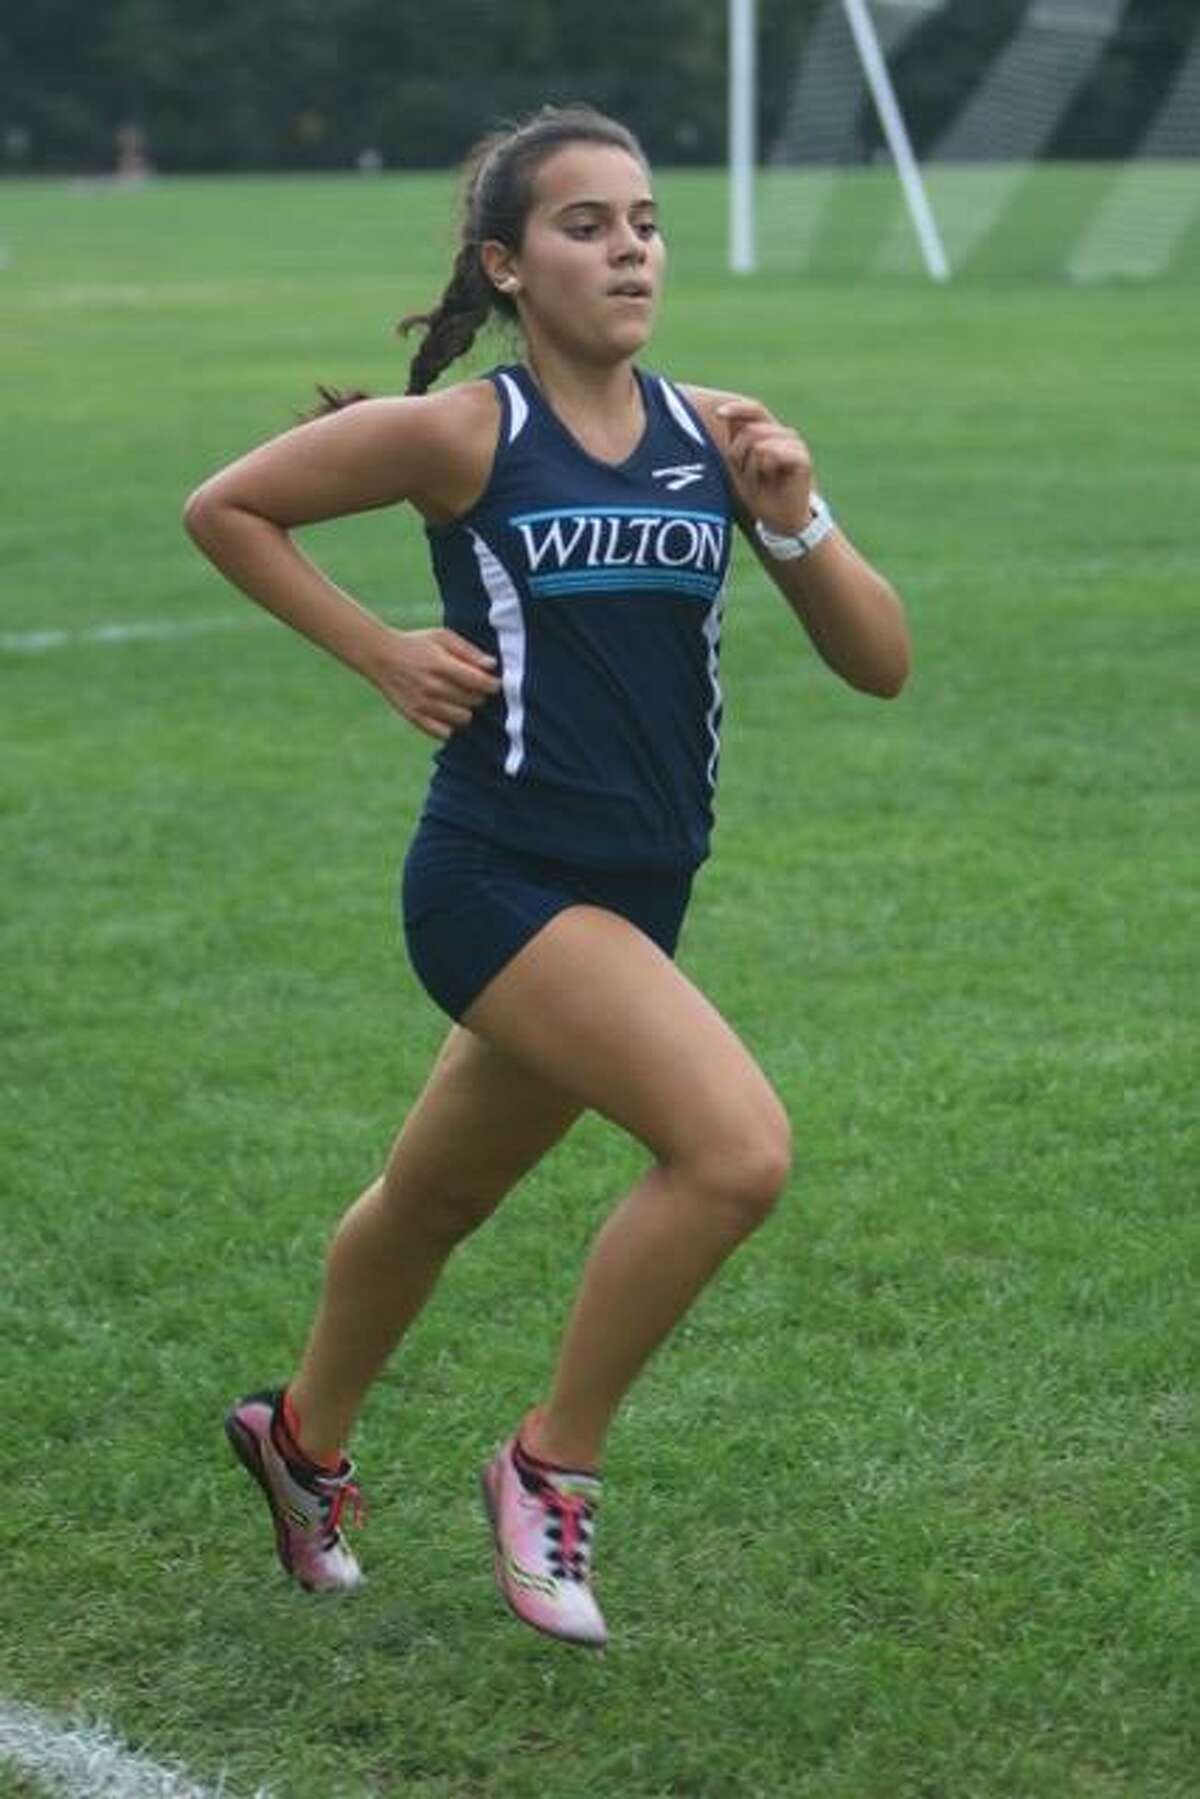 Paula Perez Pelaez runs a cross-country race for Wilton High School.